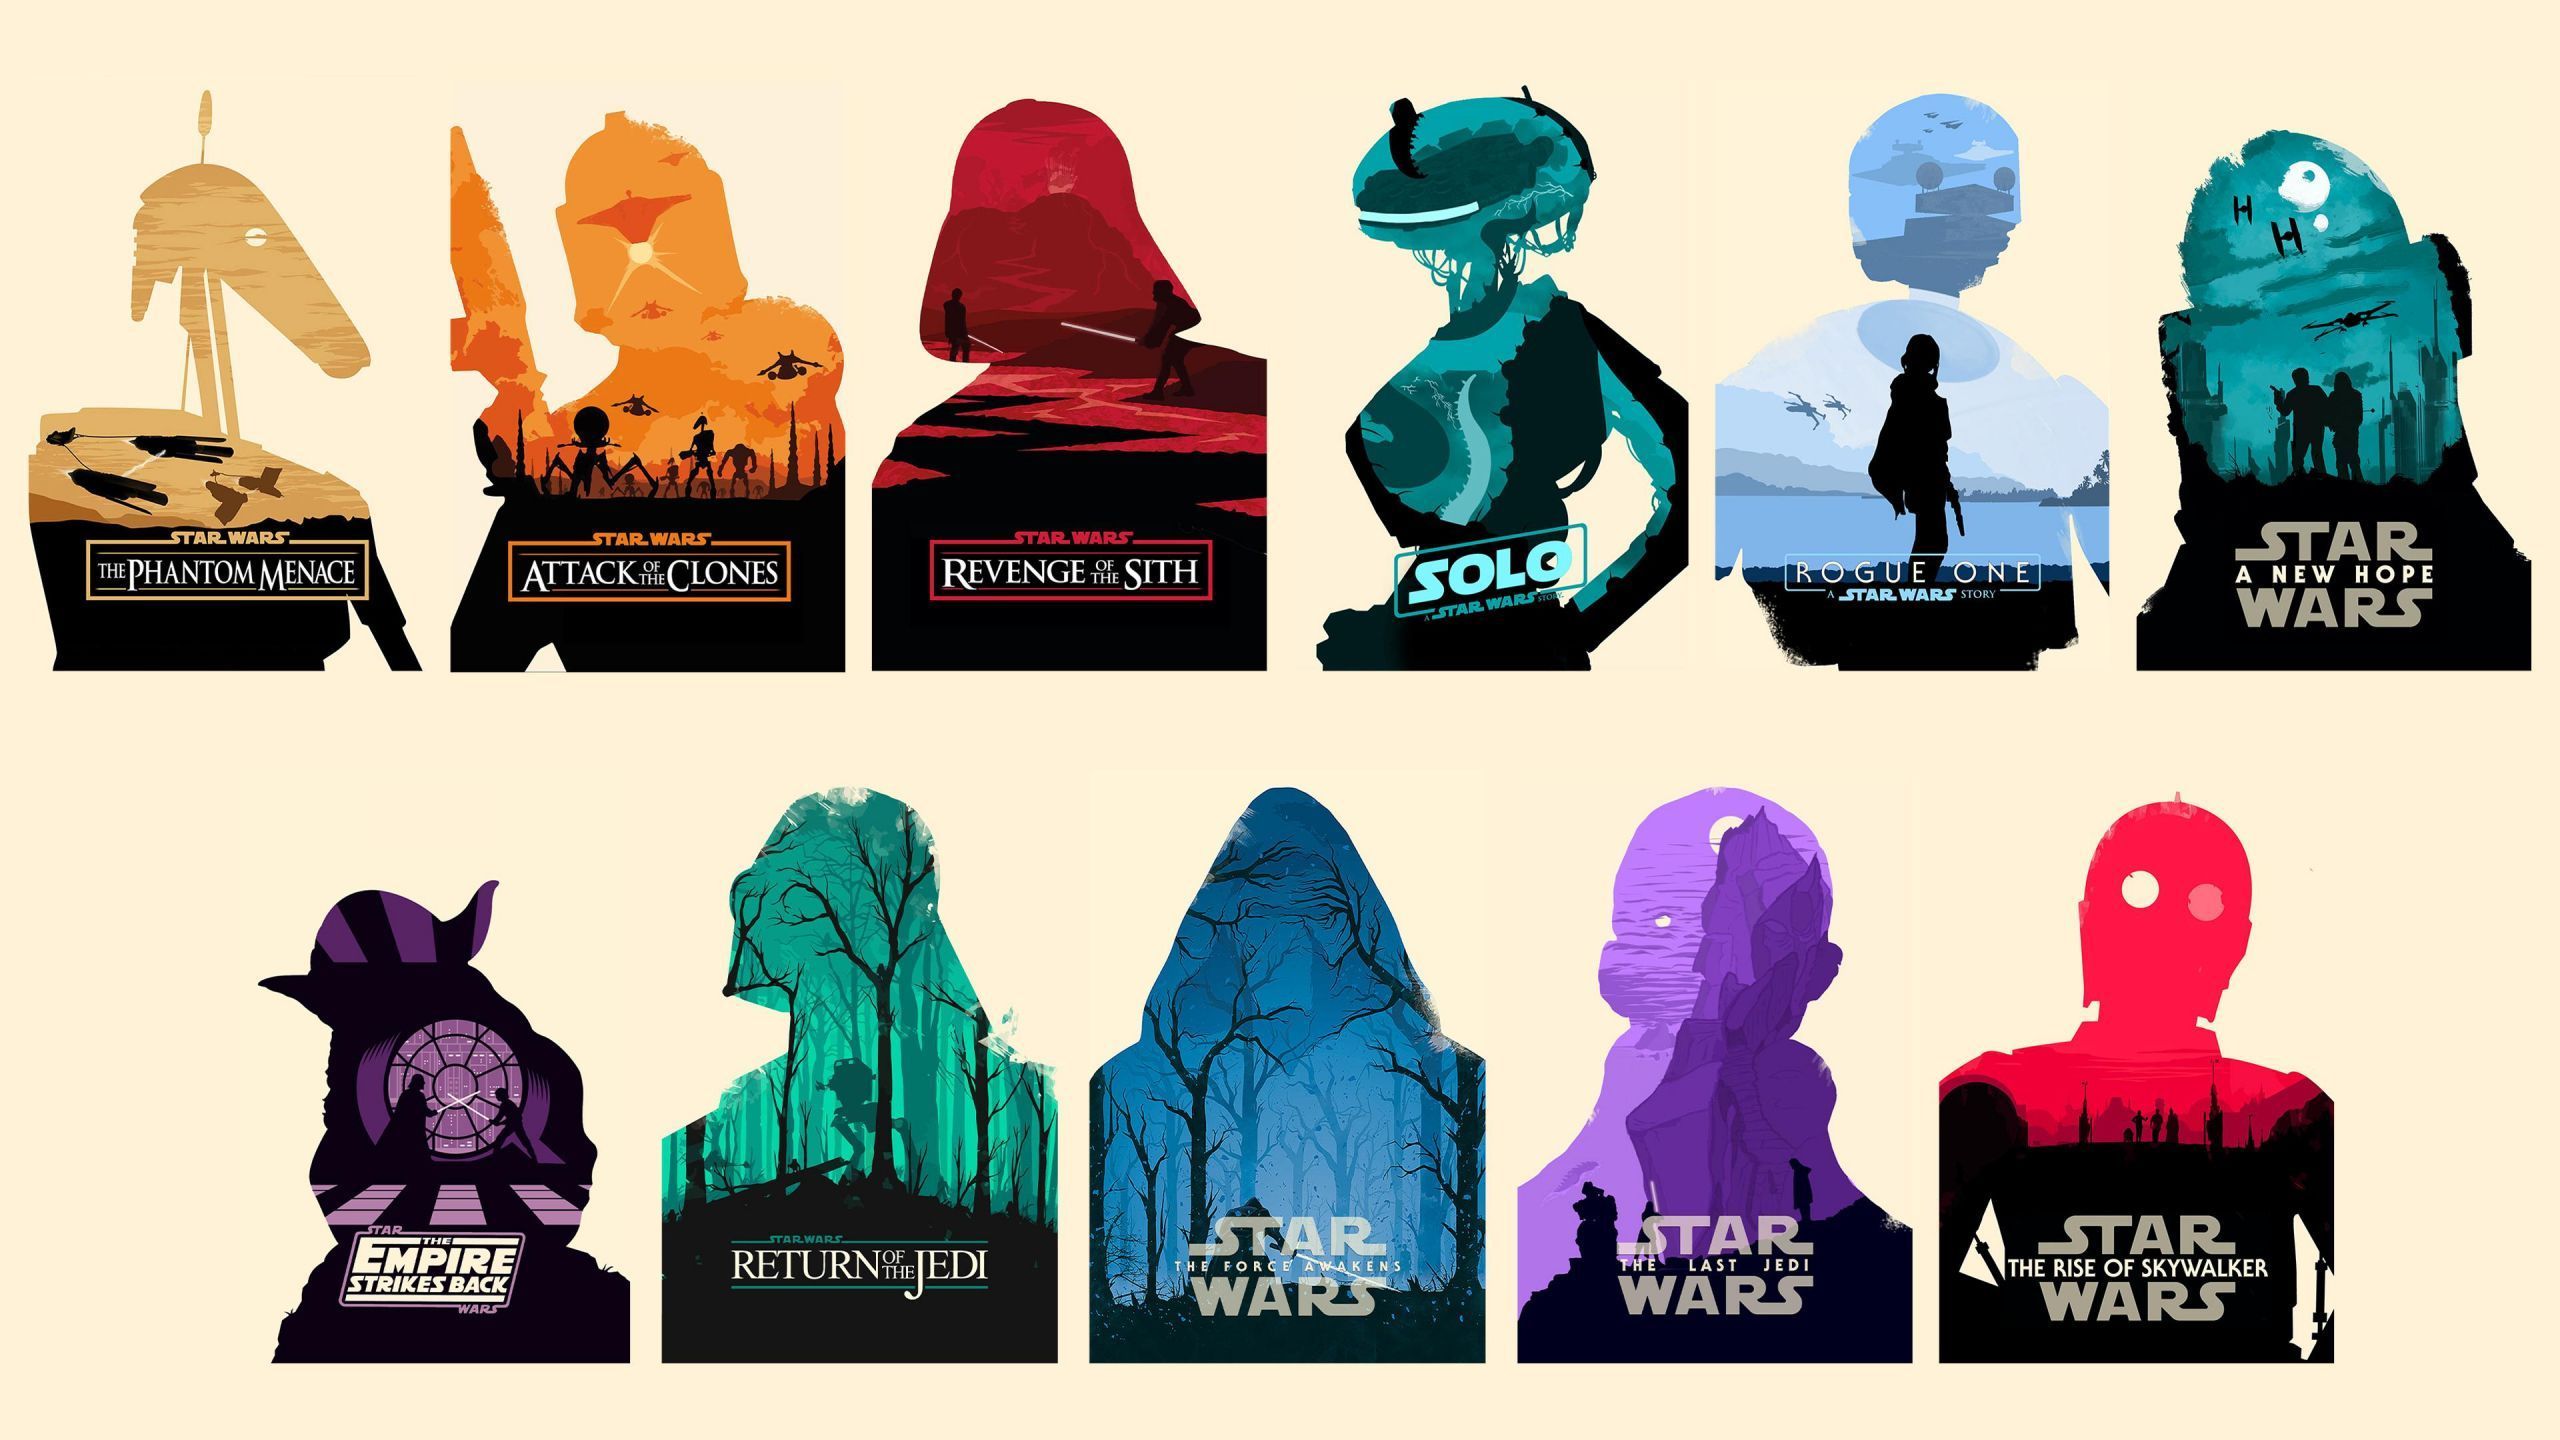 Star Wars Movie Poster wallpaper in 2560x1440 resolution